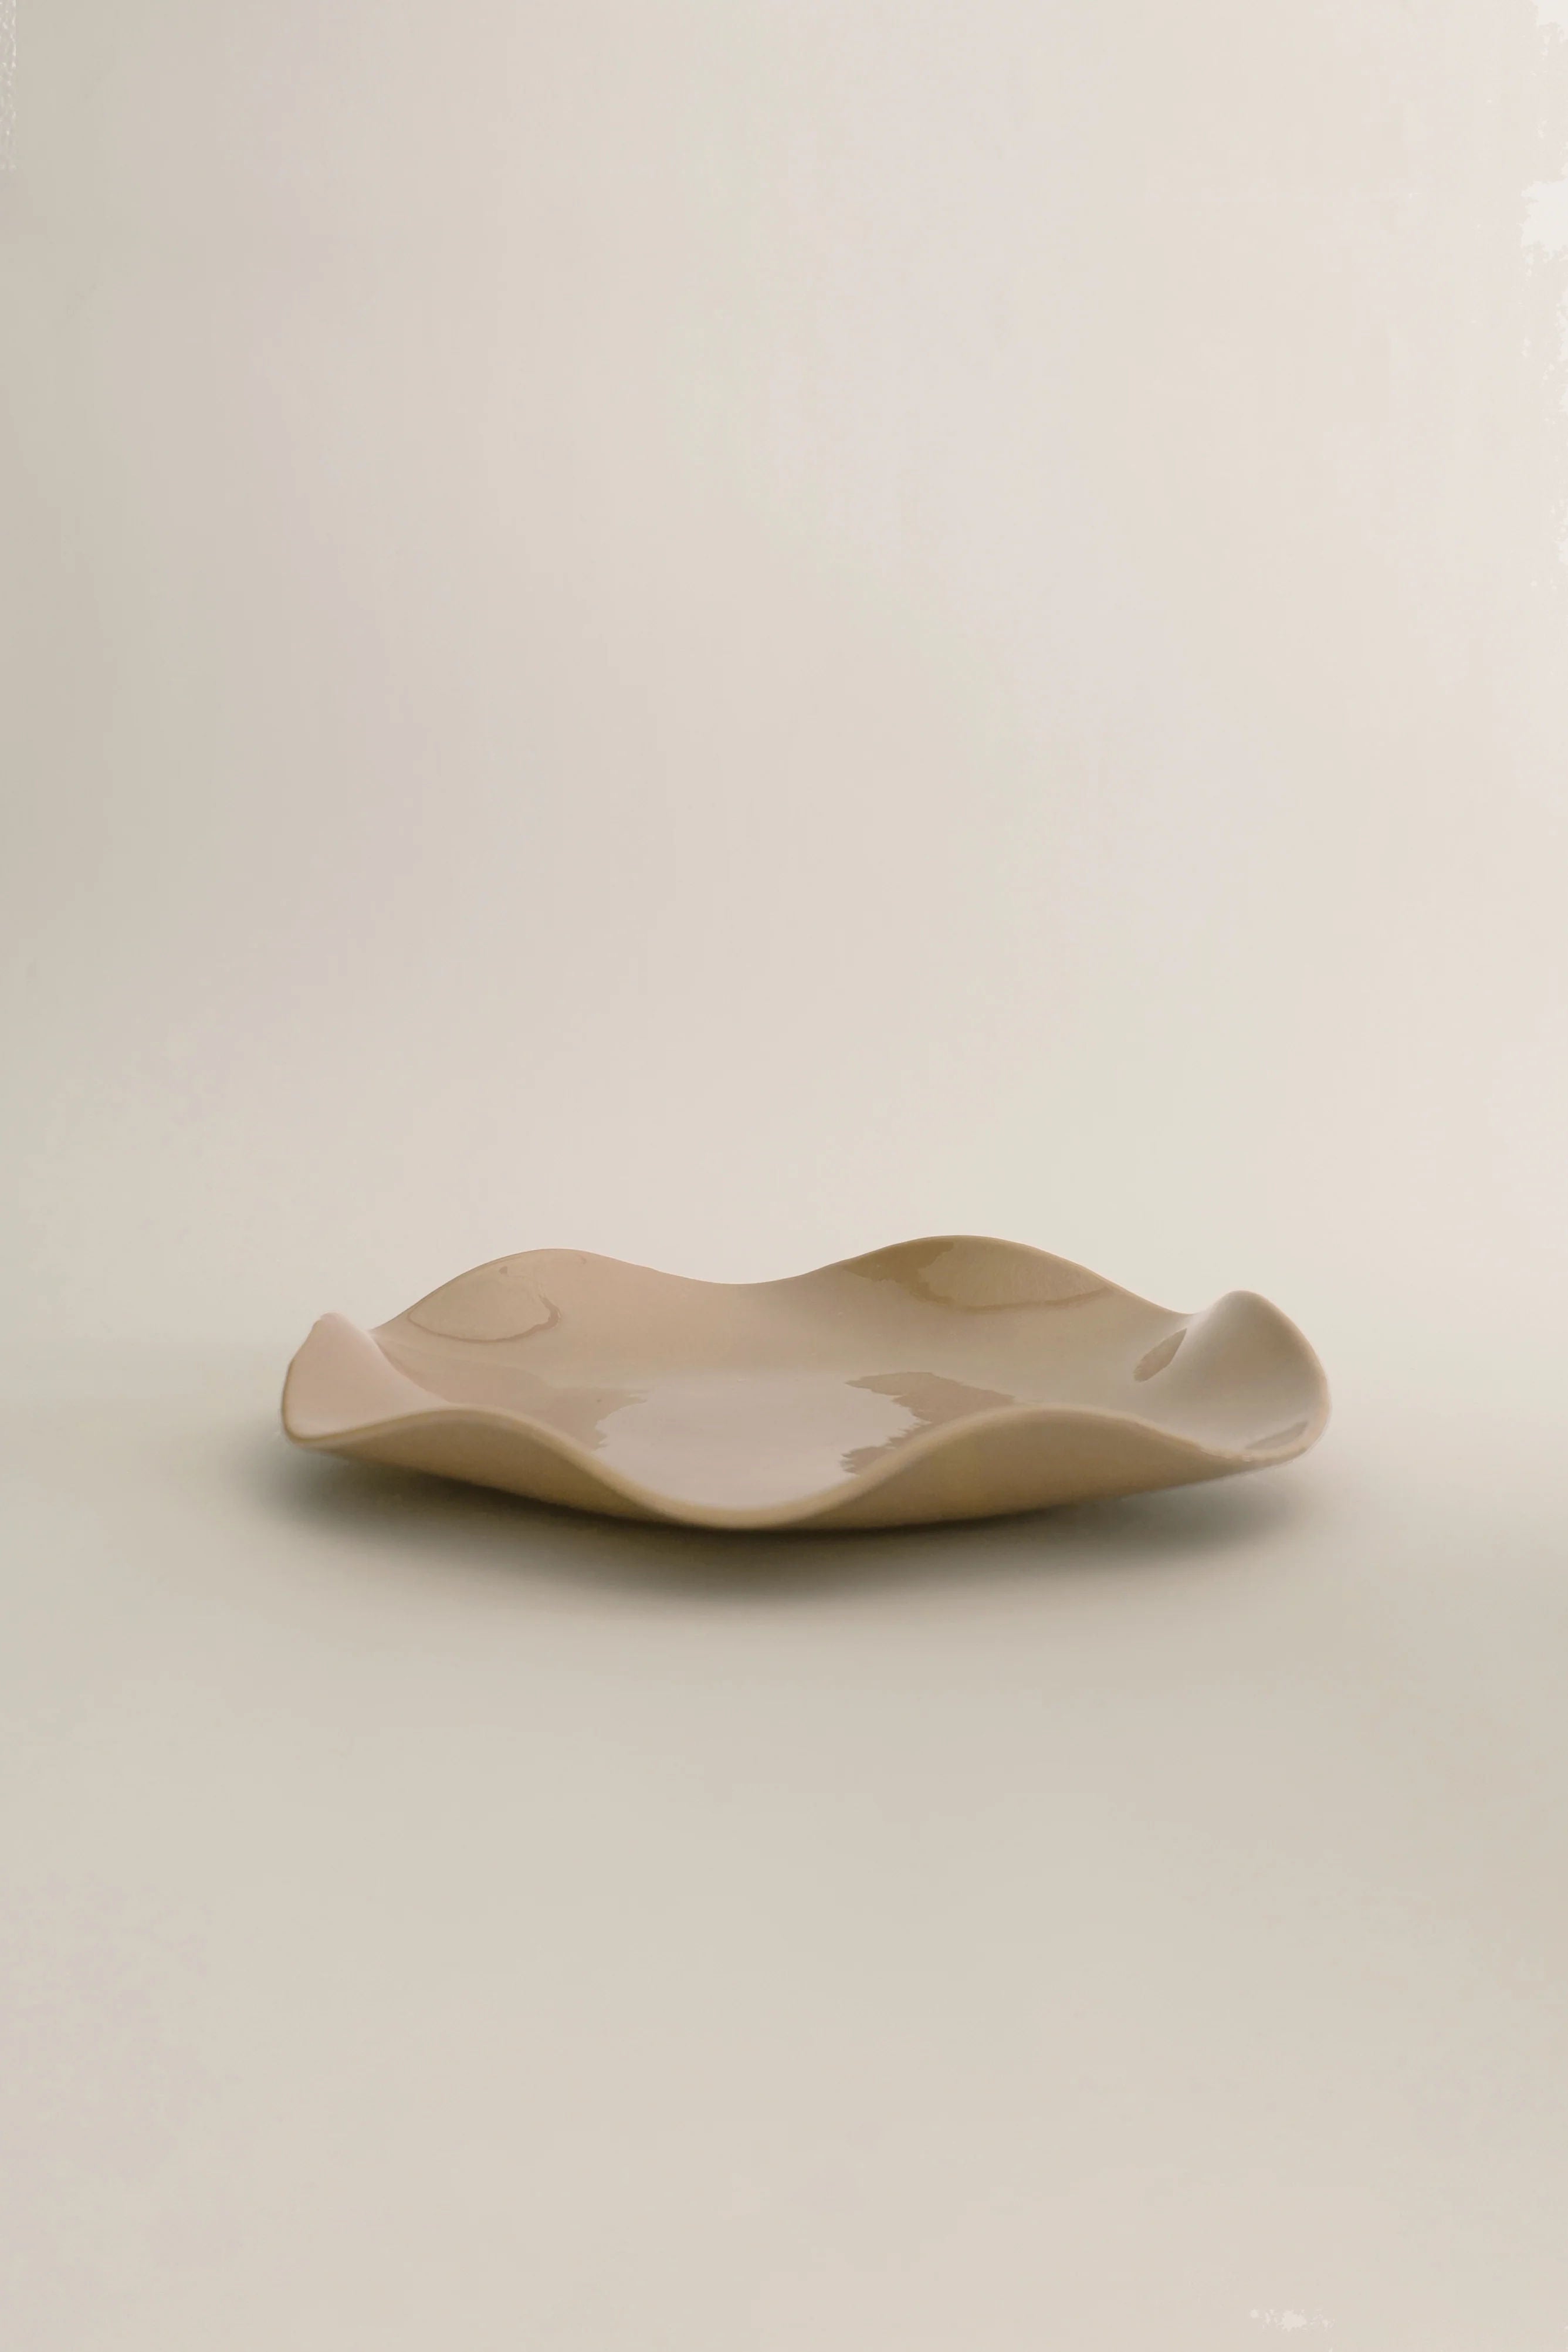 Charger Plates Petal Plate - Large Almond (Opaque) Sophie Lou Jacobsen